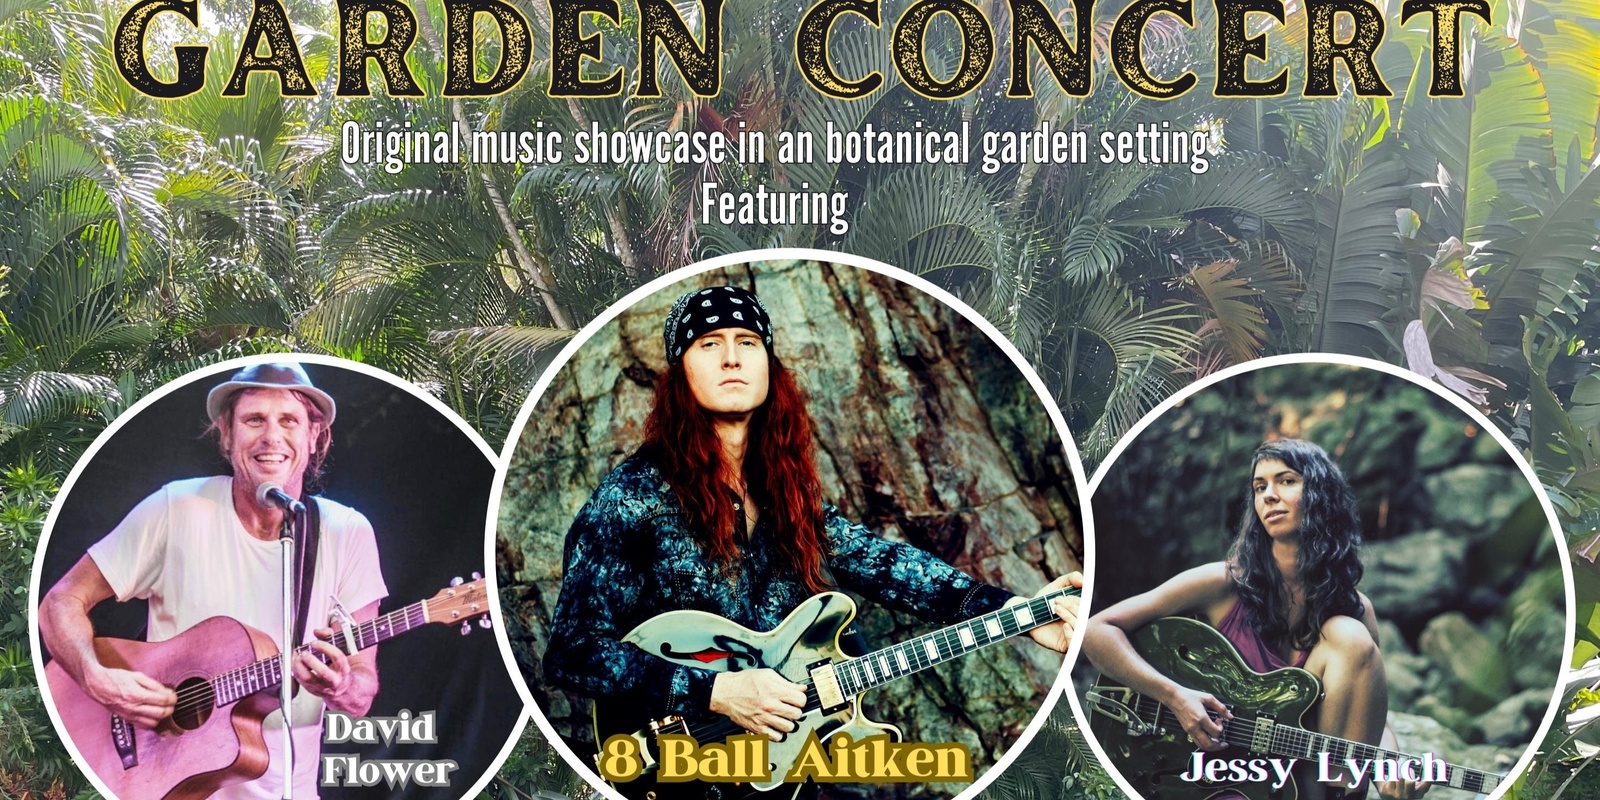 Banner image for "Garden Concert"  with 8 Ball Aitken / Jessy Lynch / David Flower